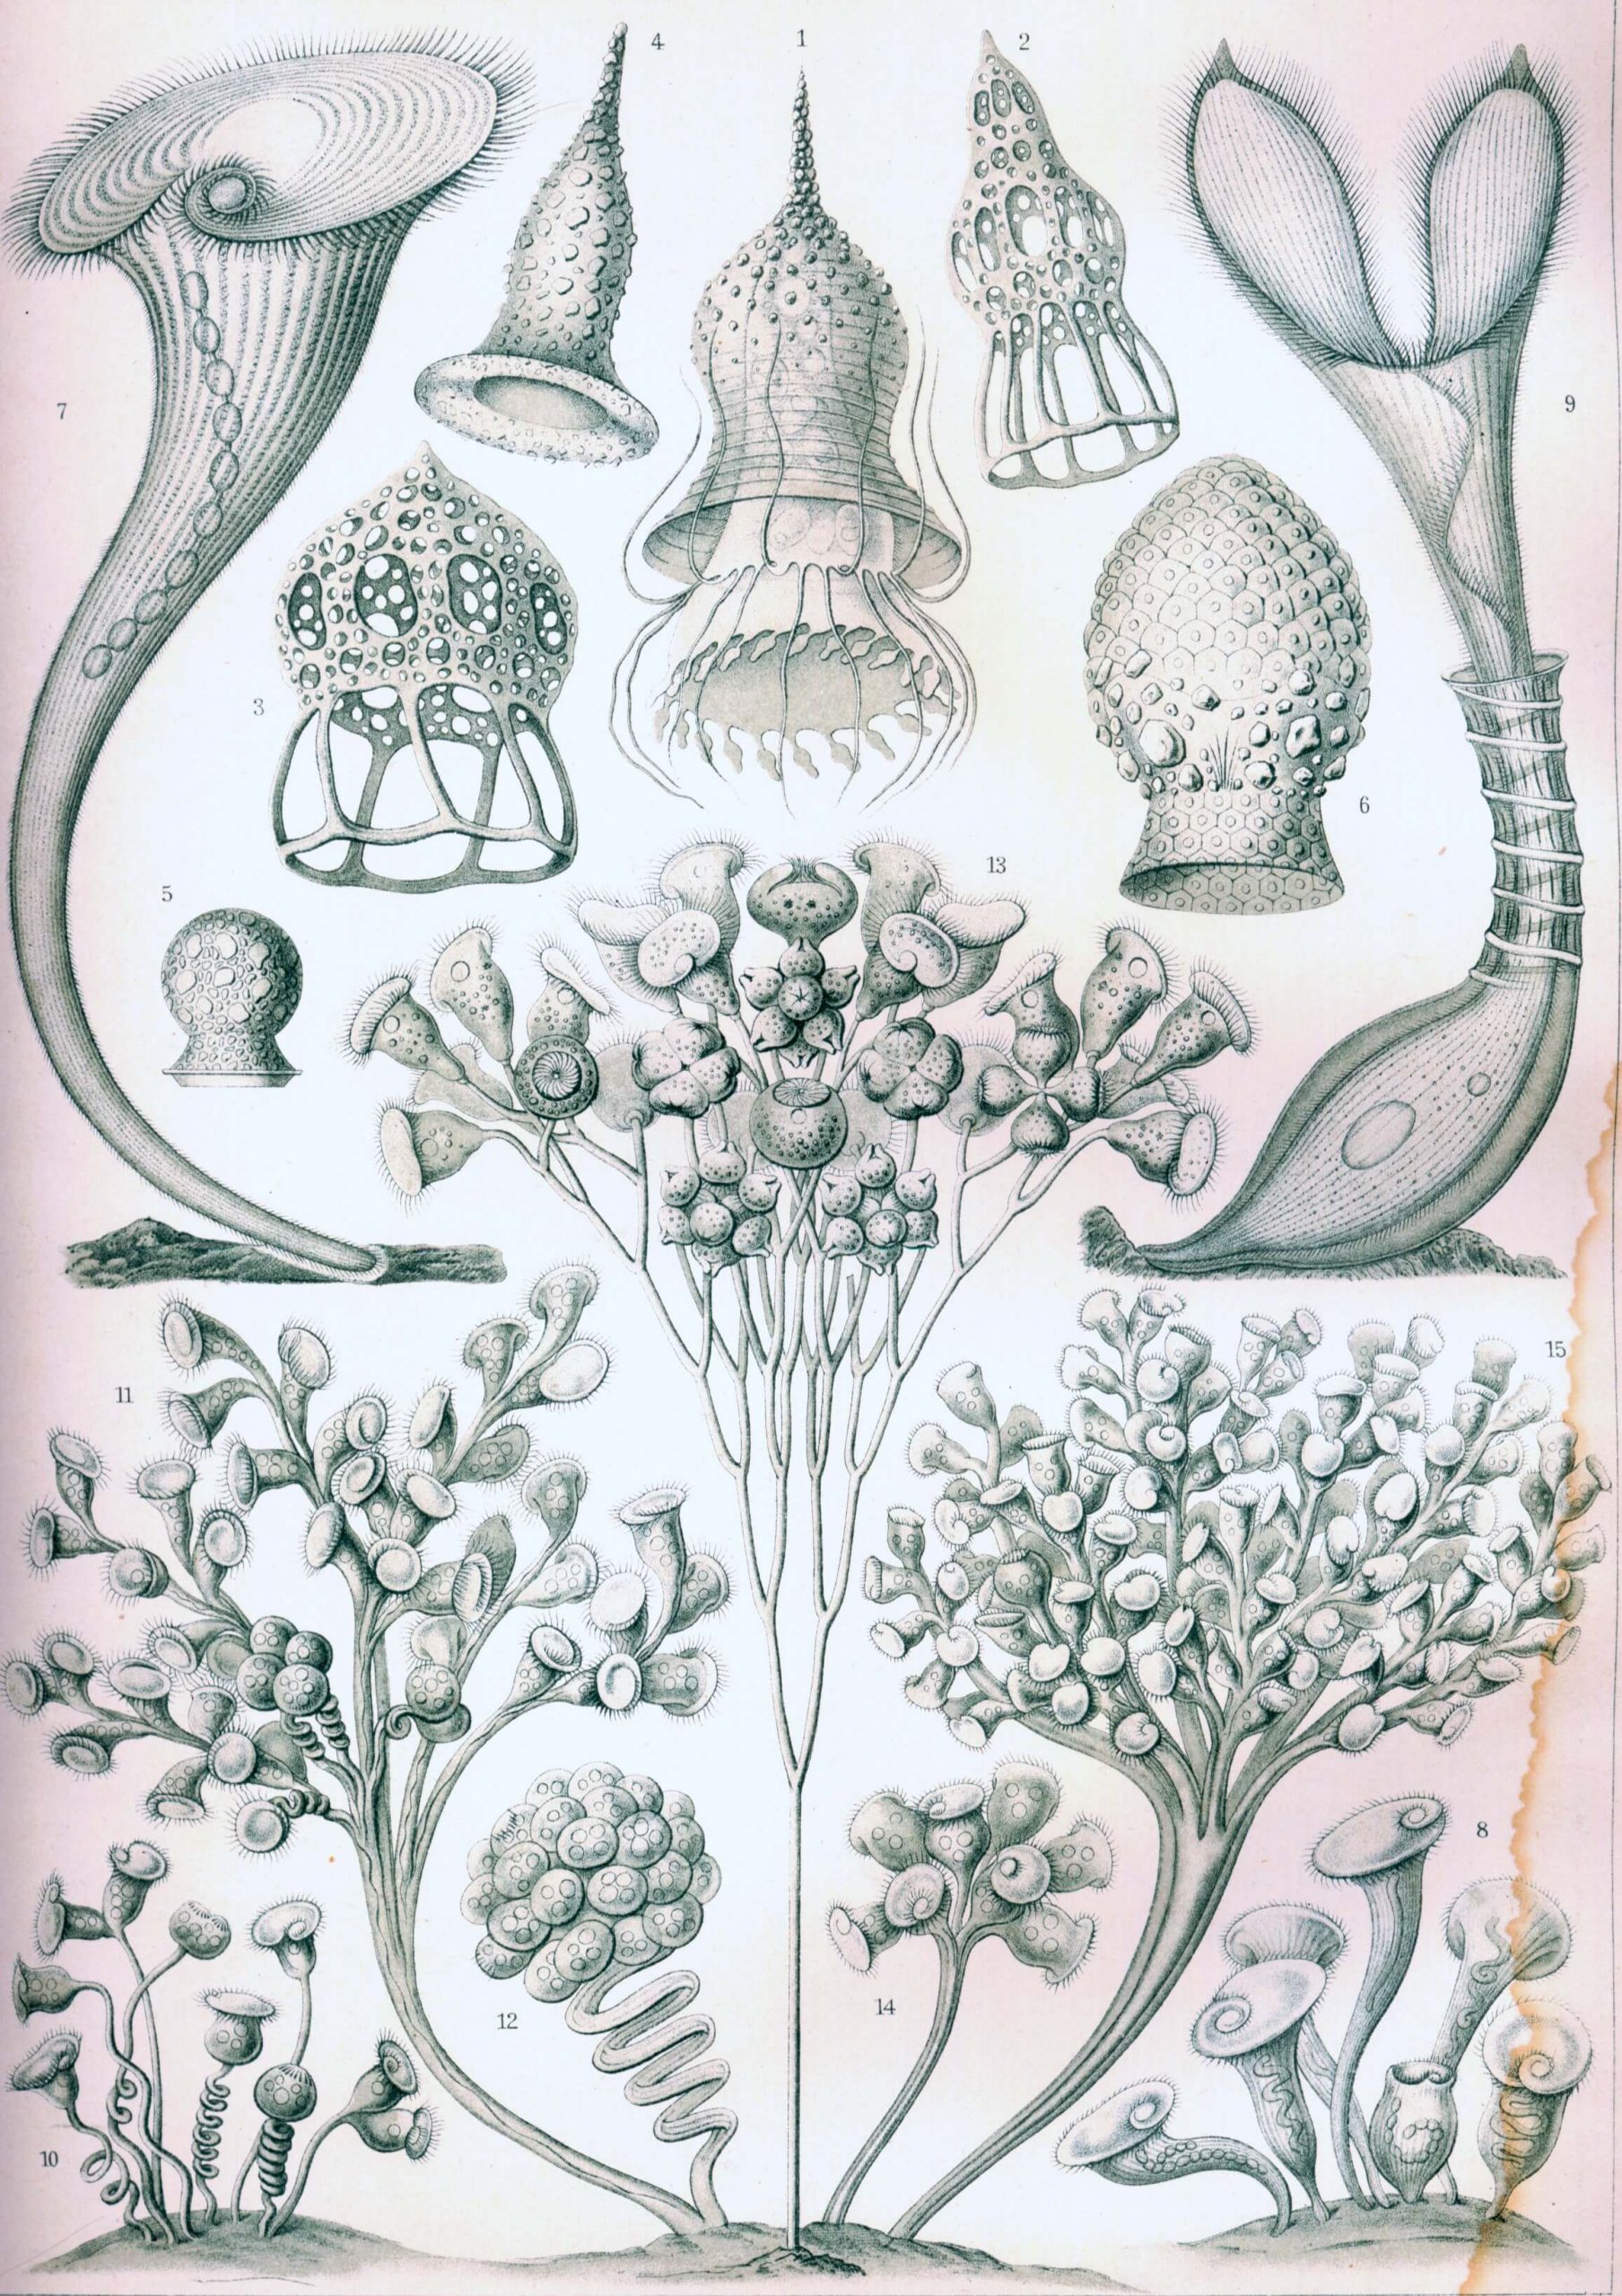 "Ciliata" by Ernst Haeckel (1904)